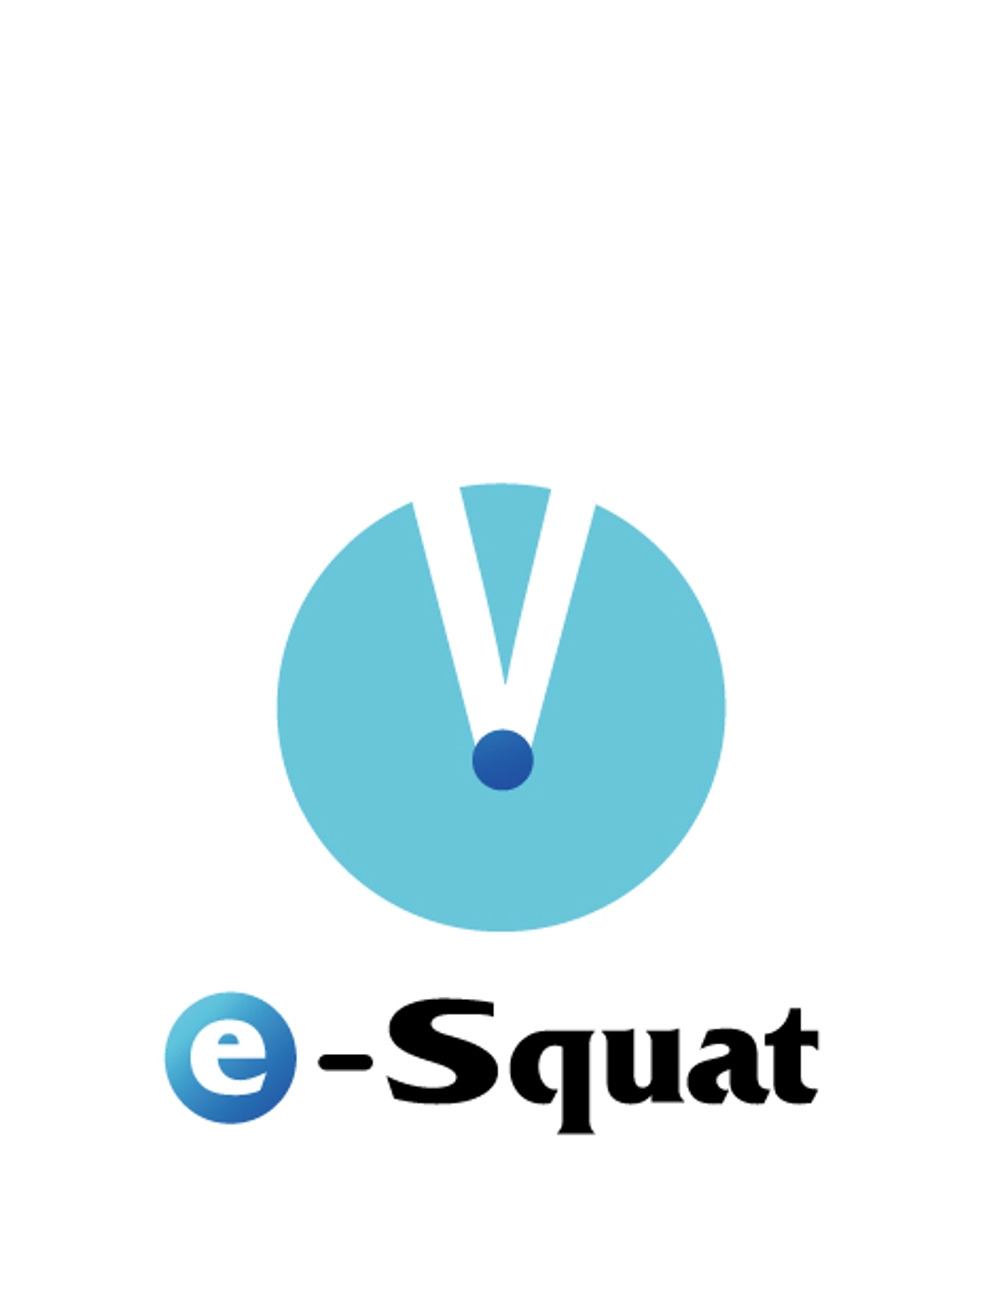 e-Squat02@@.jpg